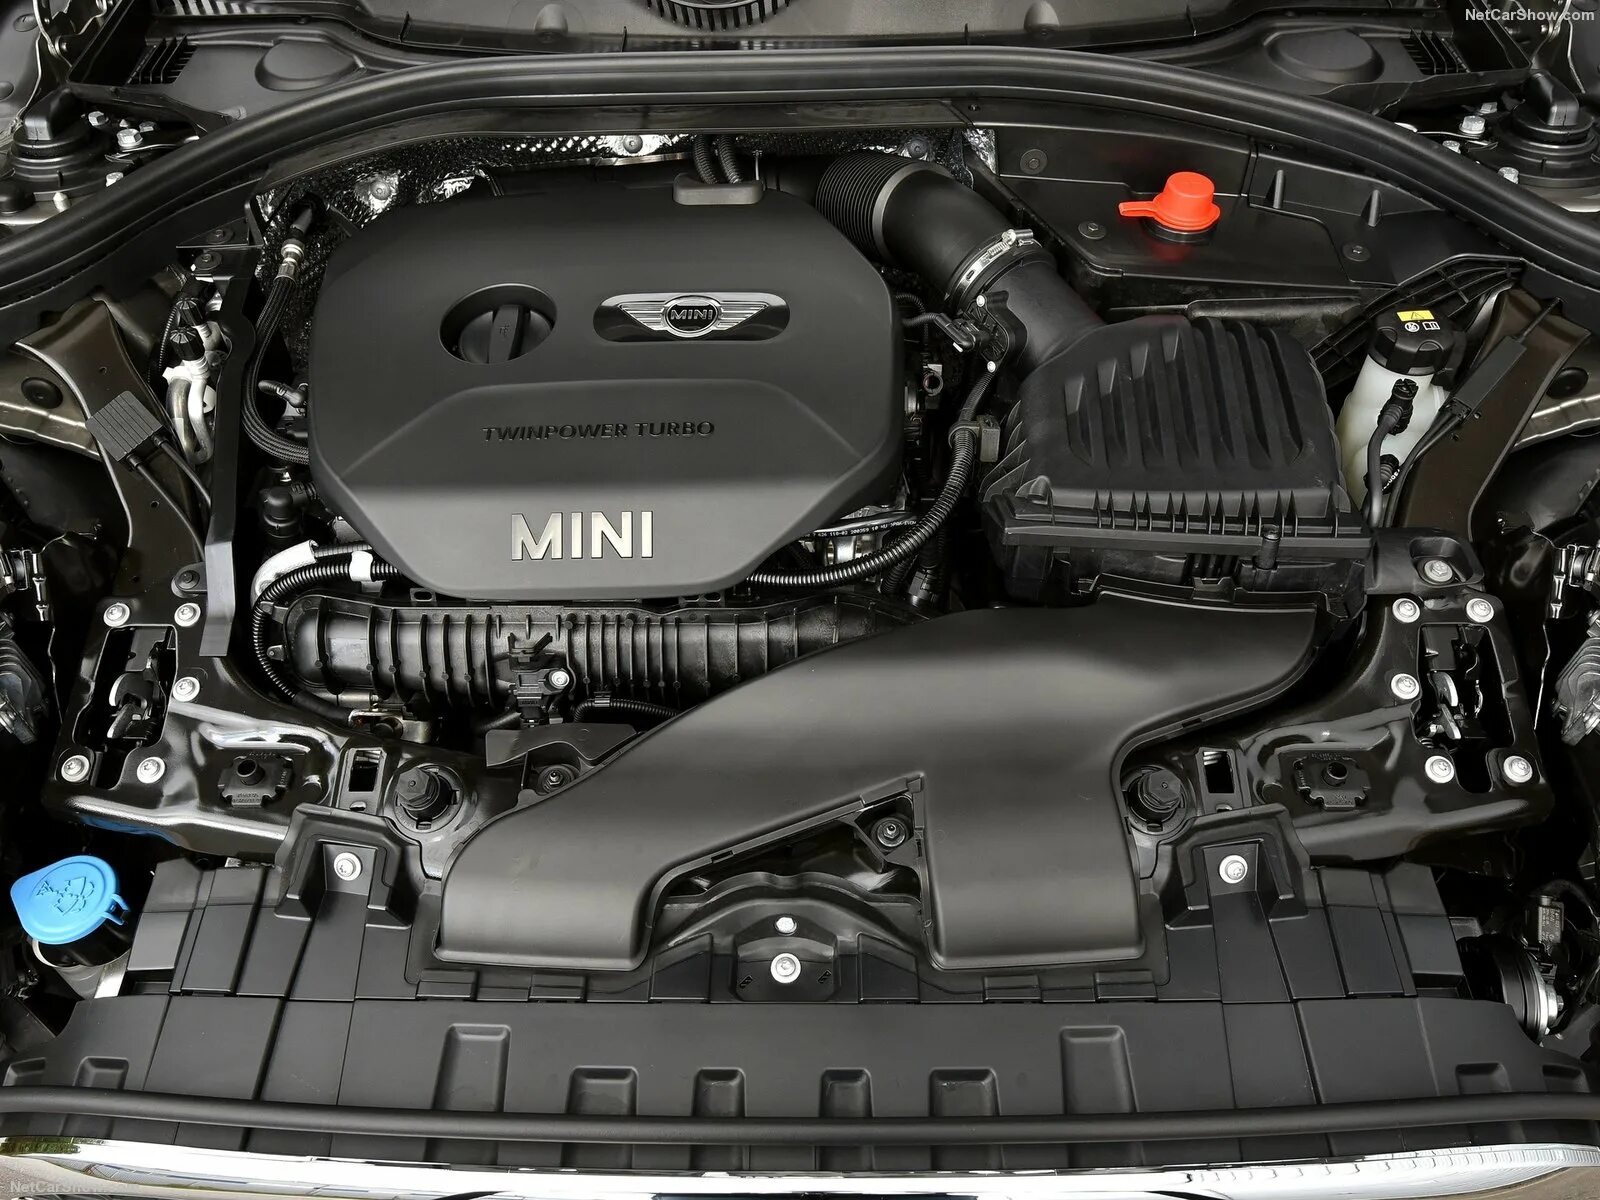 Какой двигатель в мини. Мини Купер фото двигателя. Мини Купер турбо s фото двигателя. Номер ДВС Mini Cooper s 2018 год 2.0 фото. Двигатель на мини фото.